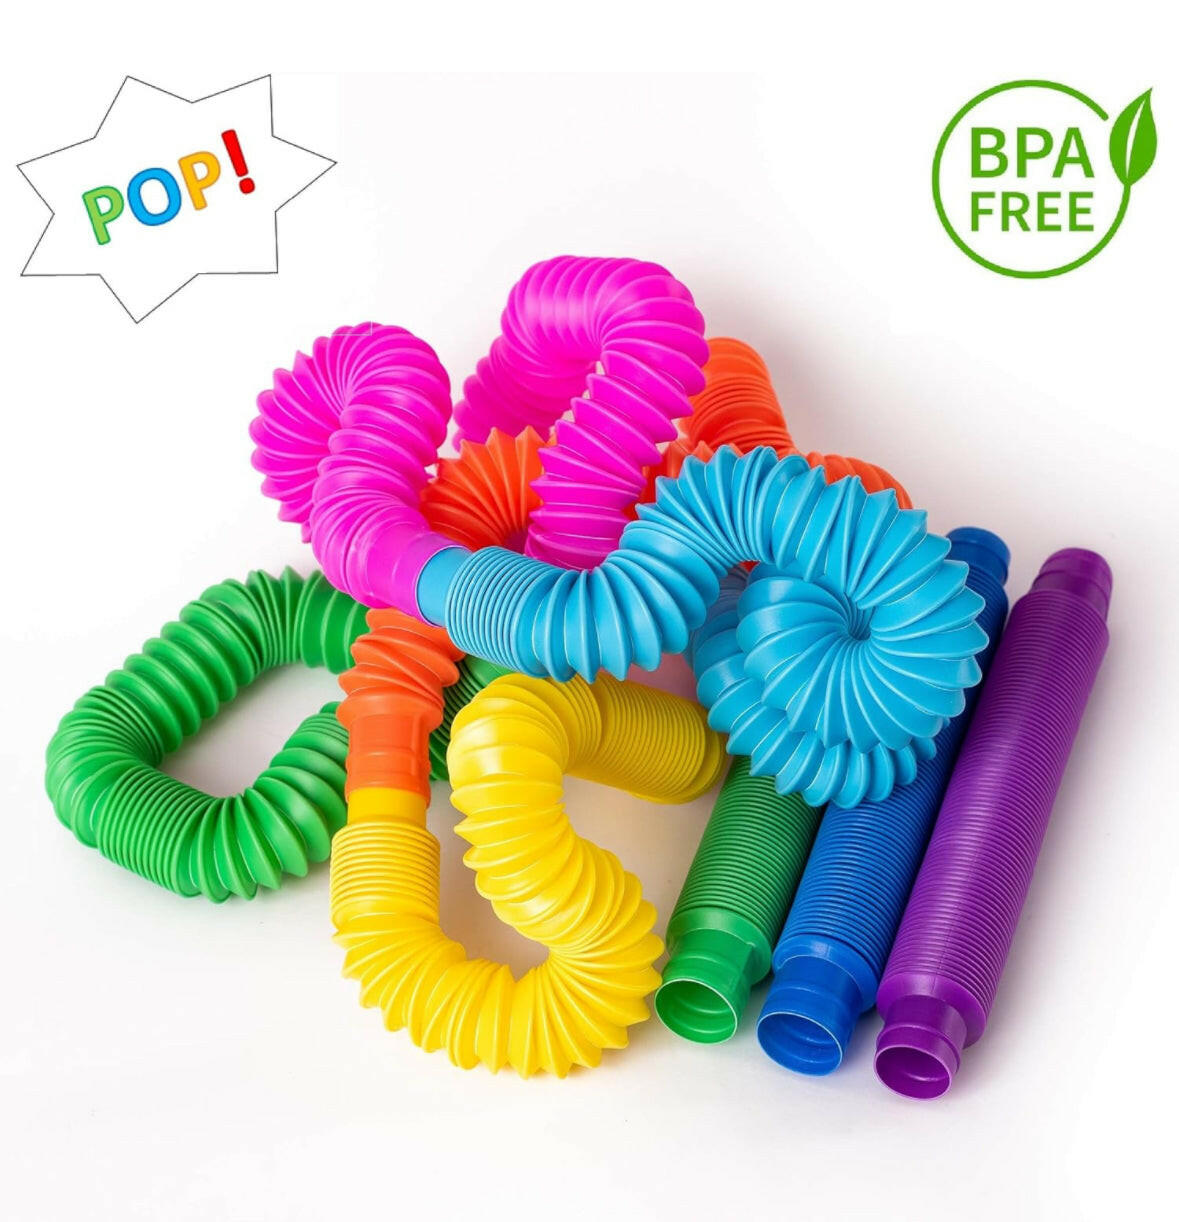 Nutty Toys 8pk Pop Tubes Sensory Toys (Large) Fine Motor Skills Learning Toddler Toy for Kids